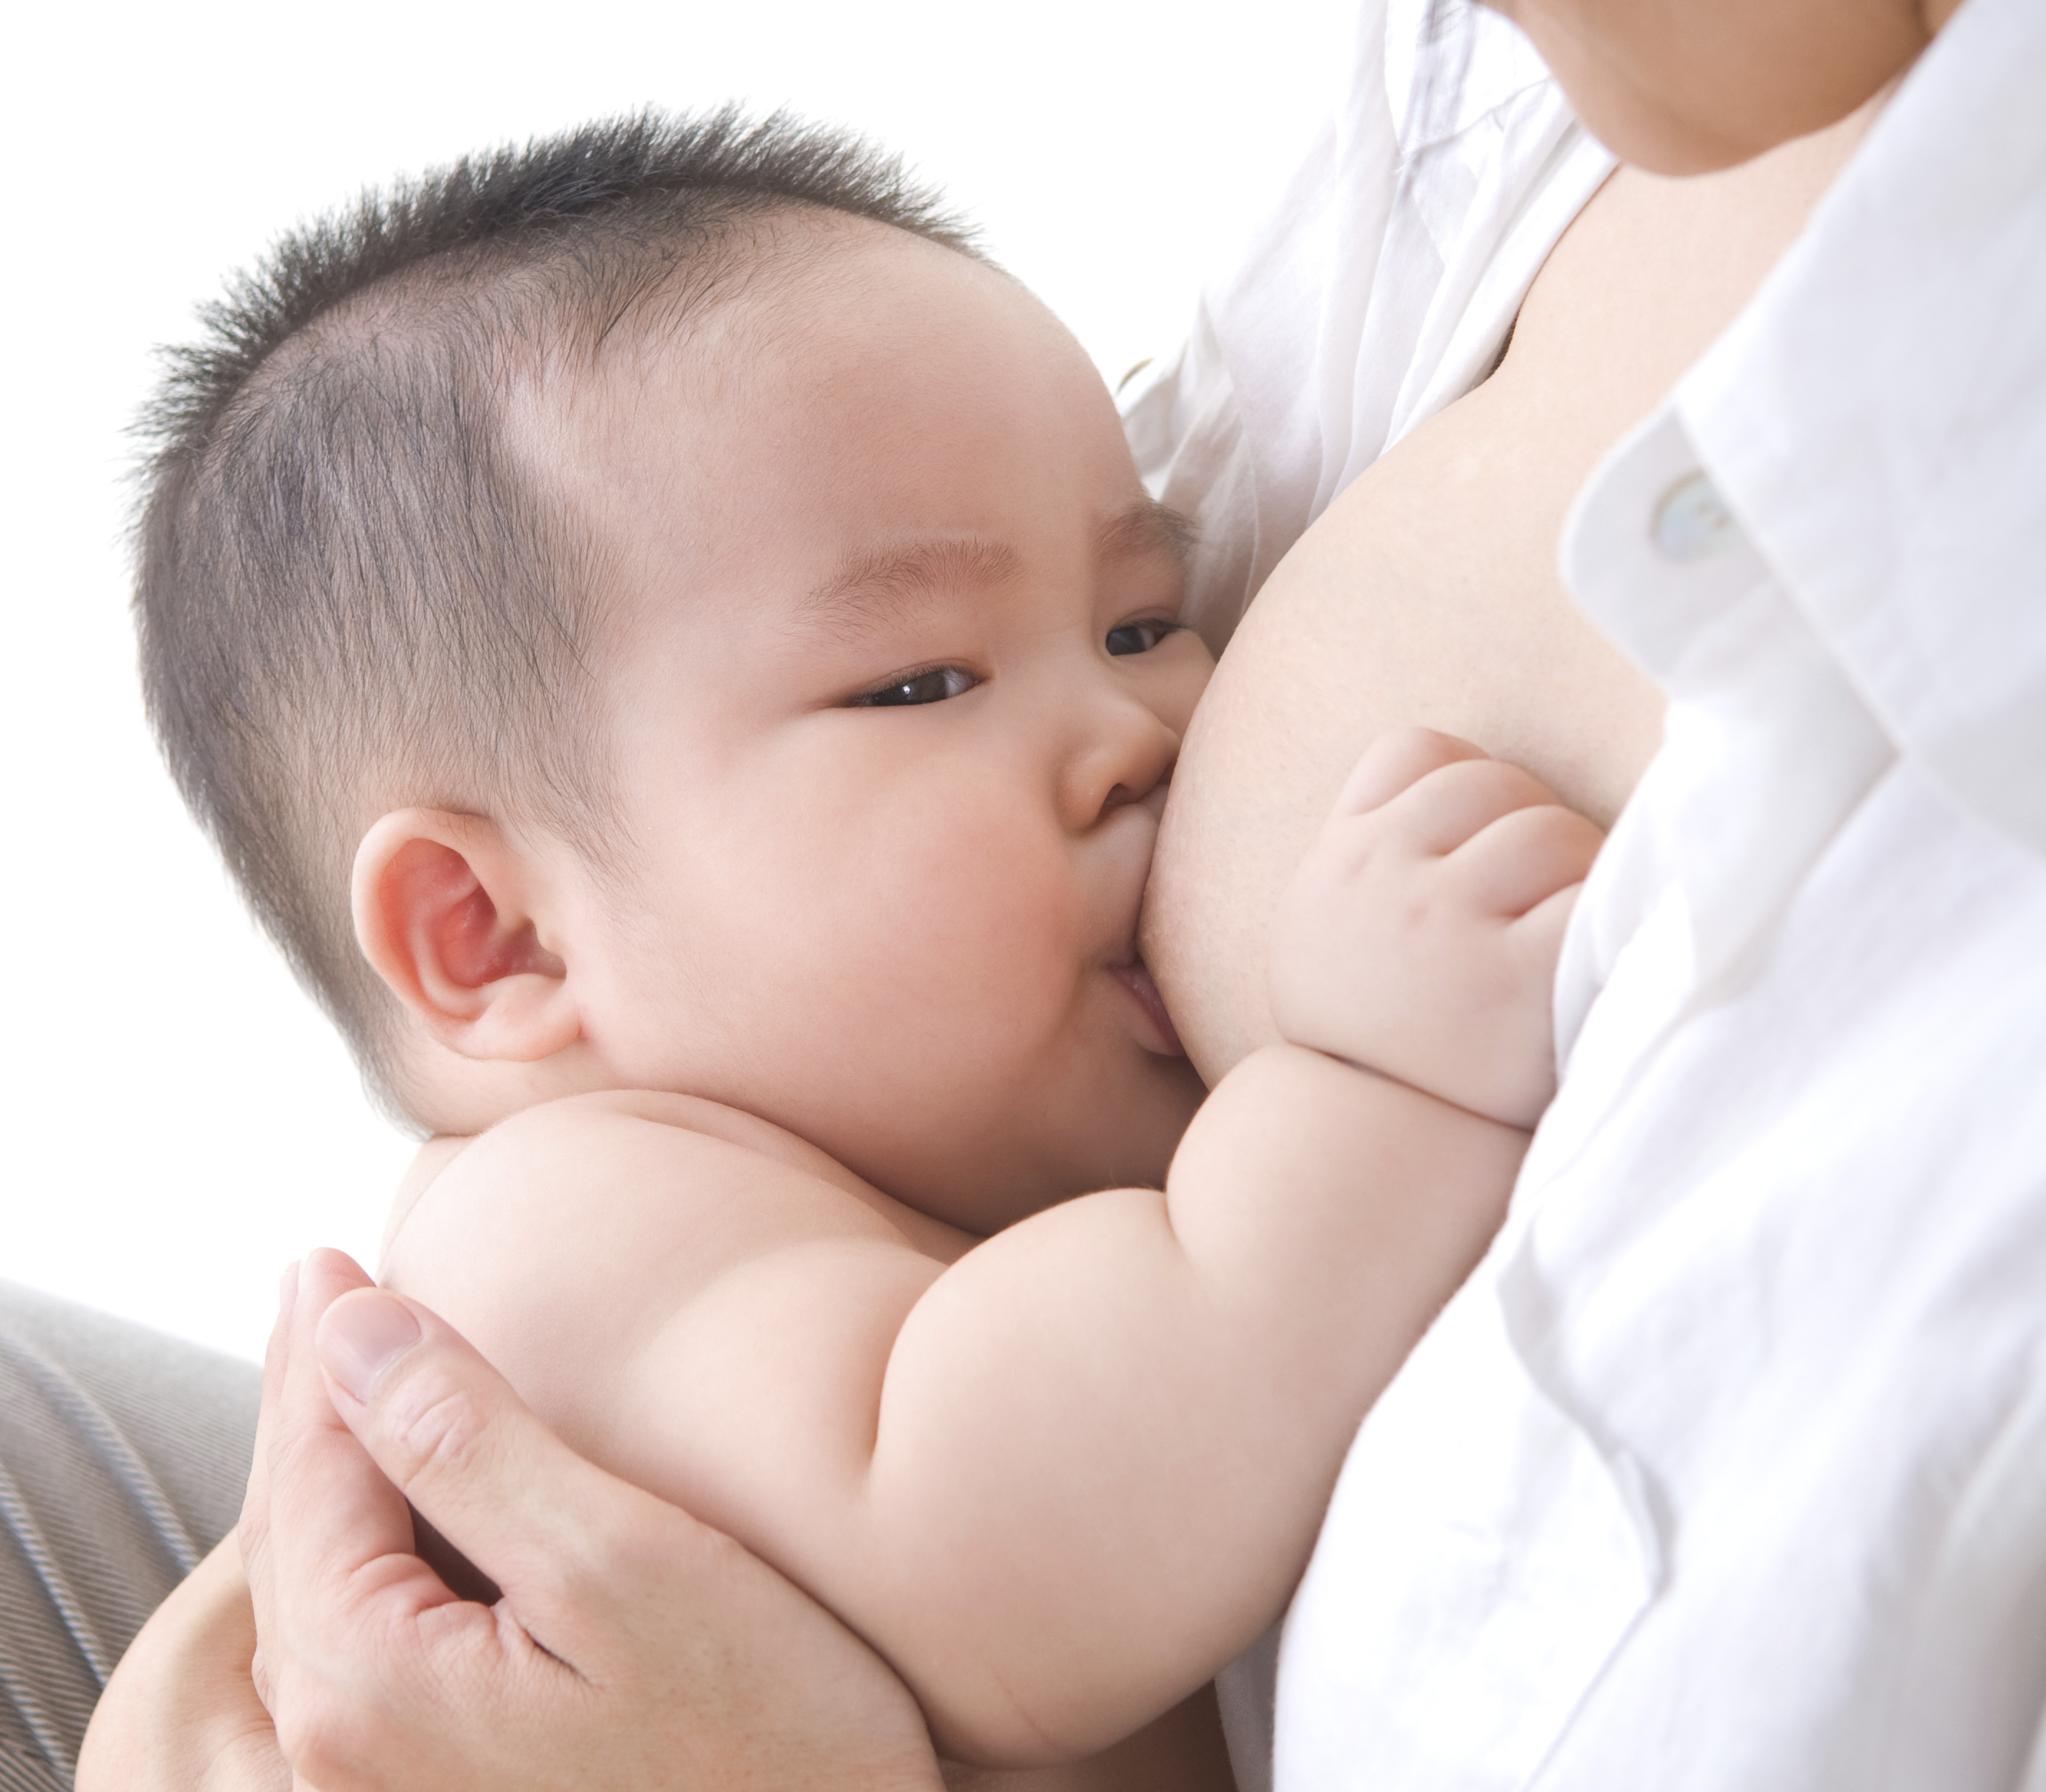 Mom claims breastfeeding as long as Einstein's mom is key to genius baby